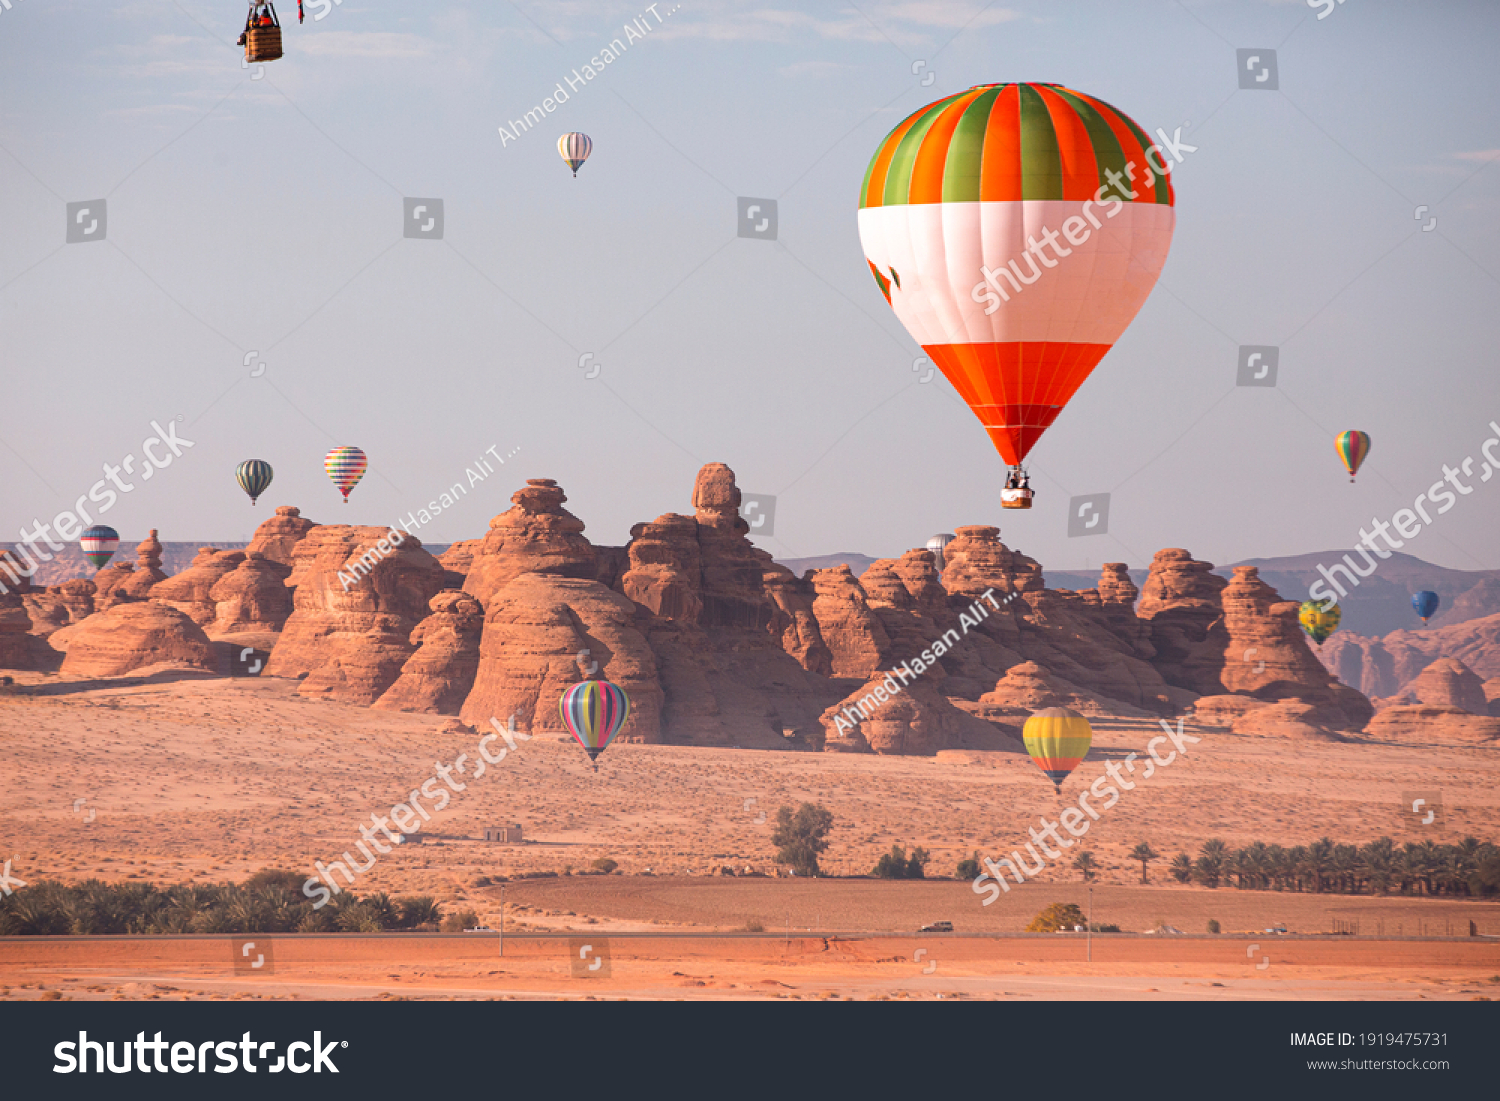 Hot Air Balloon Festival over Mada'in Saleh (Hegra) ancient site, Al Ula, Saudi Arabia. was taken in 2020 Mar 18 #1919475731